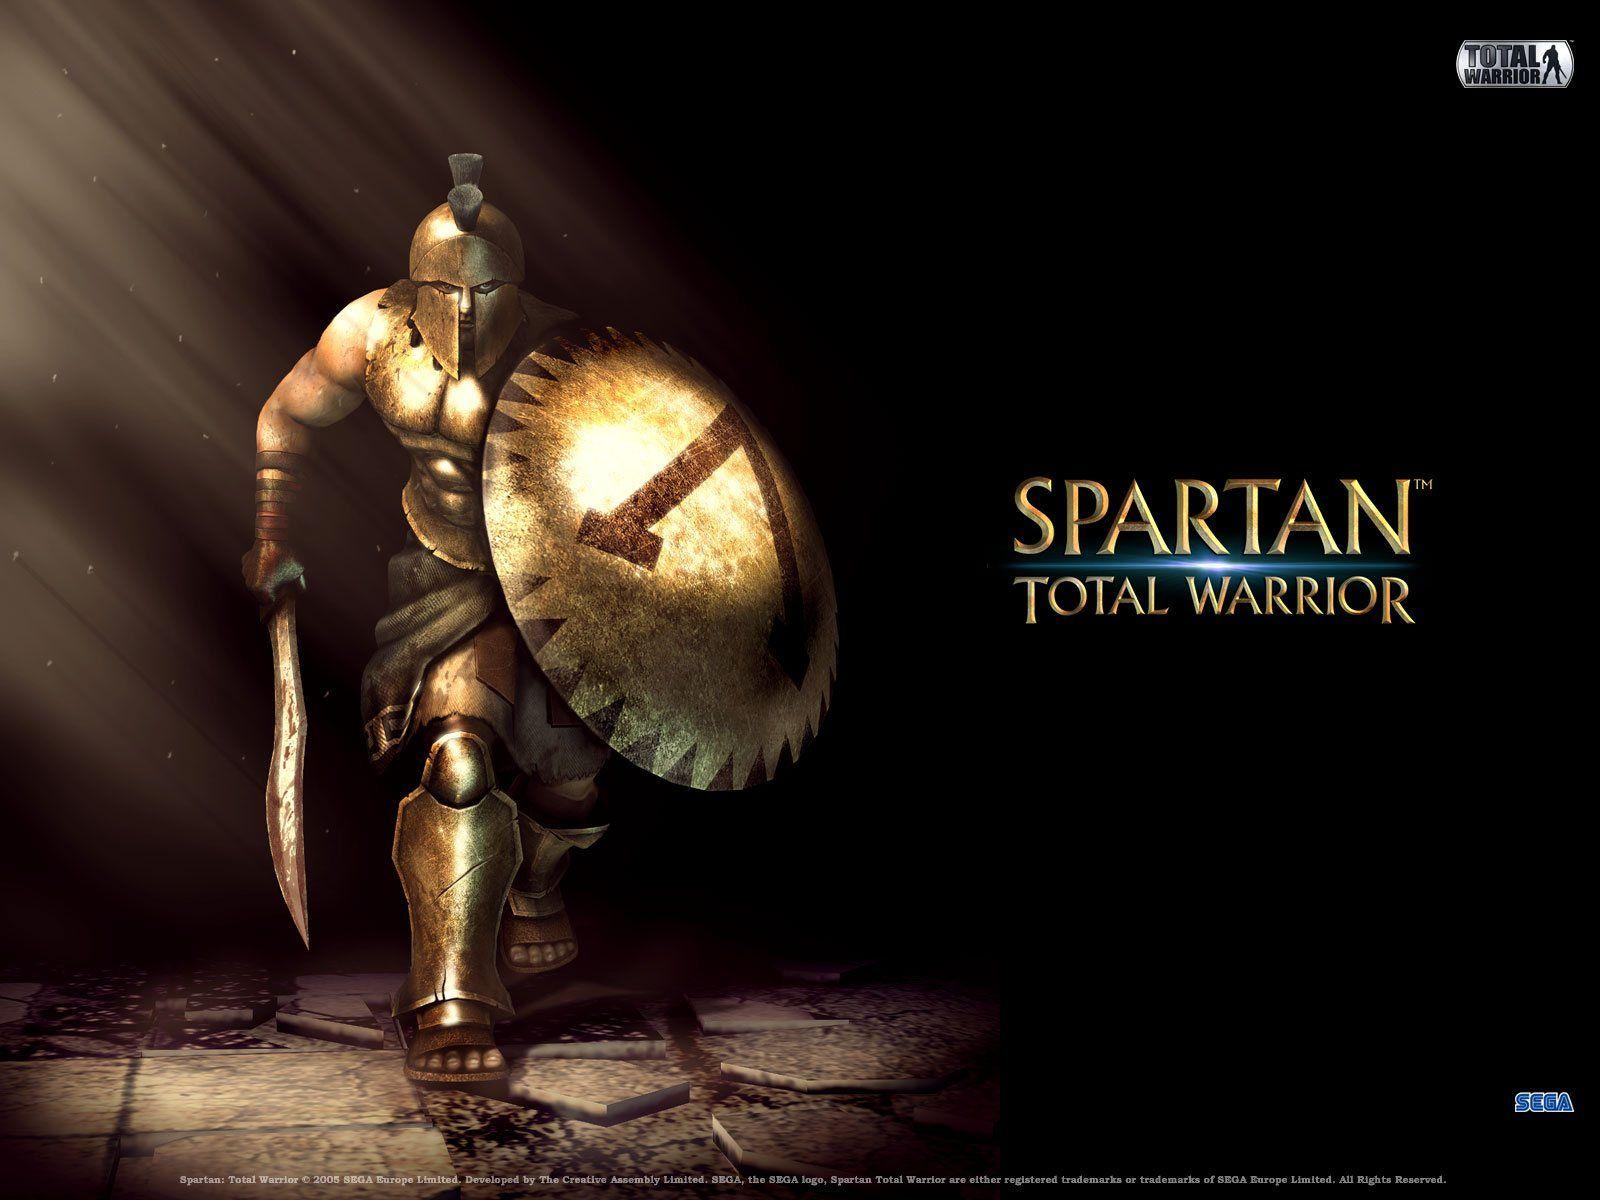 Spartan Wallpaper, HD Creative Spartan Image, Full HD Wallpaper